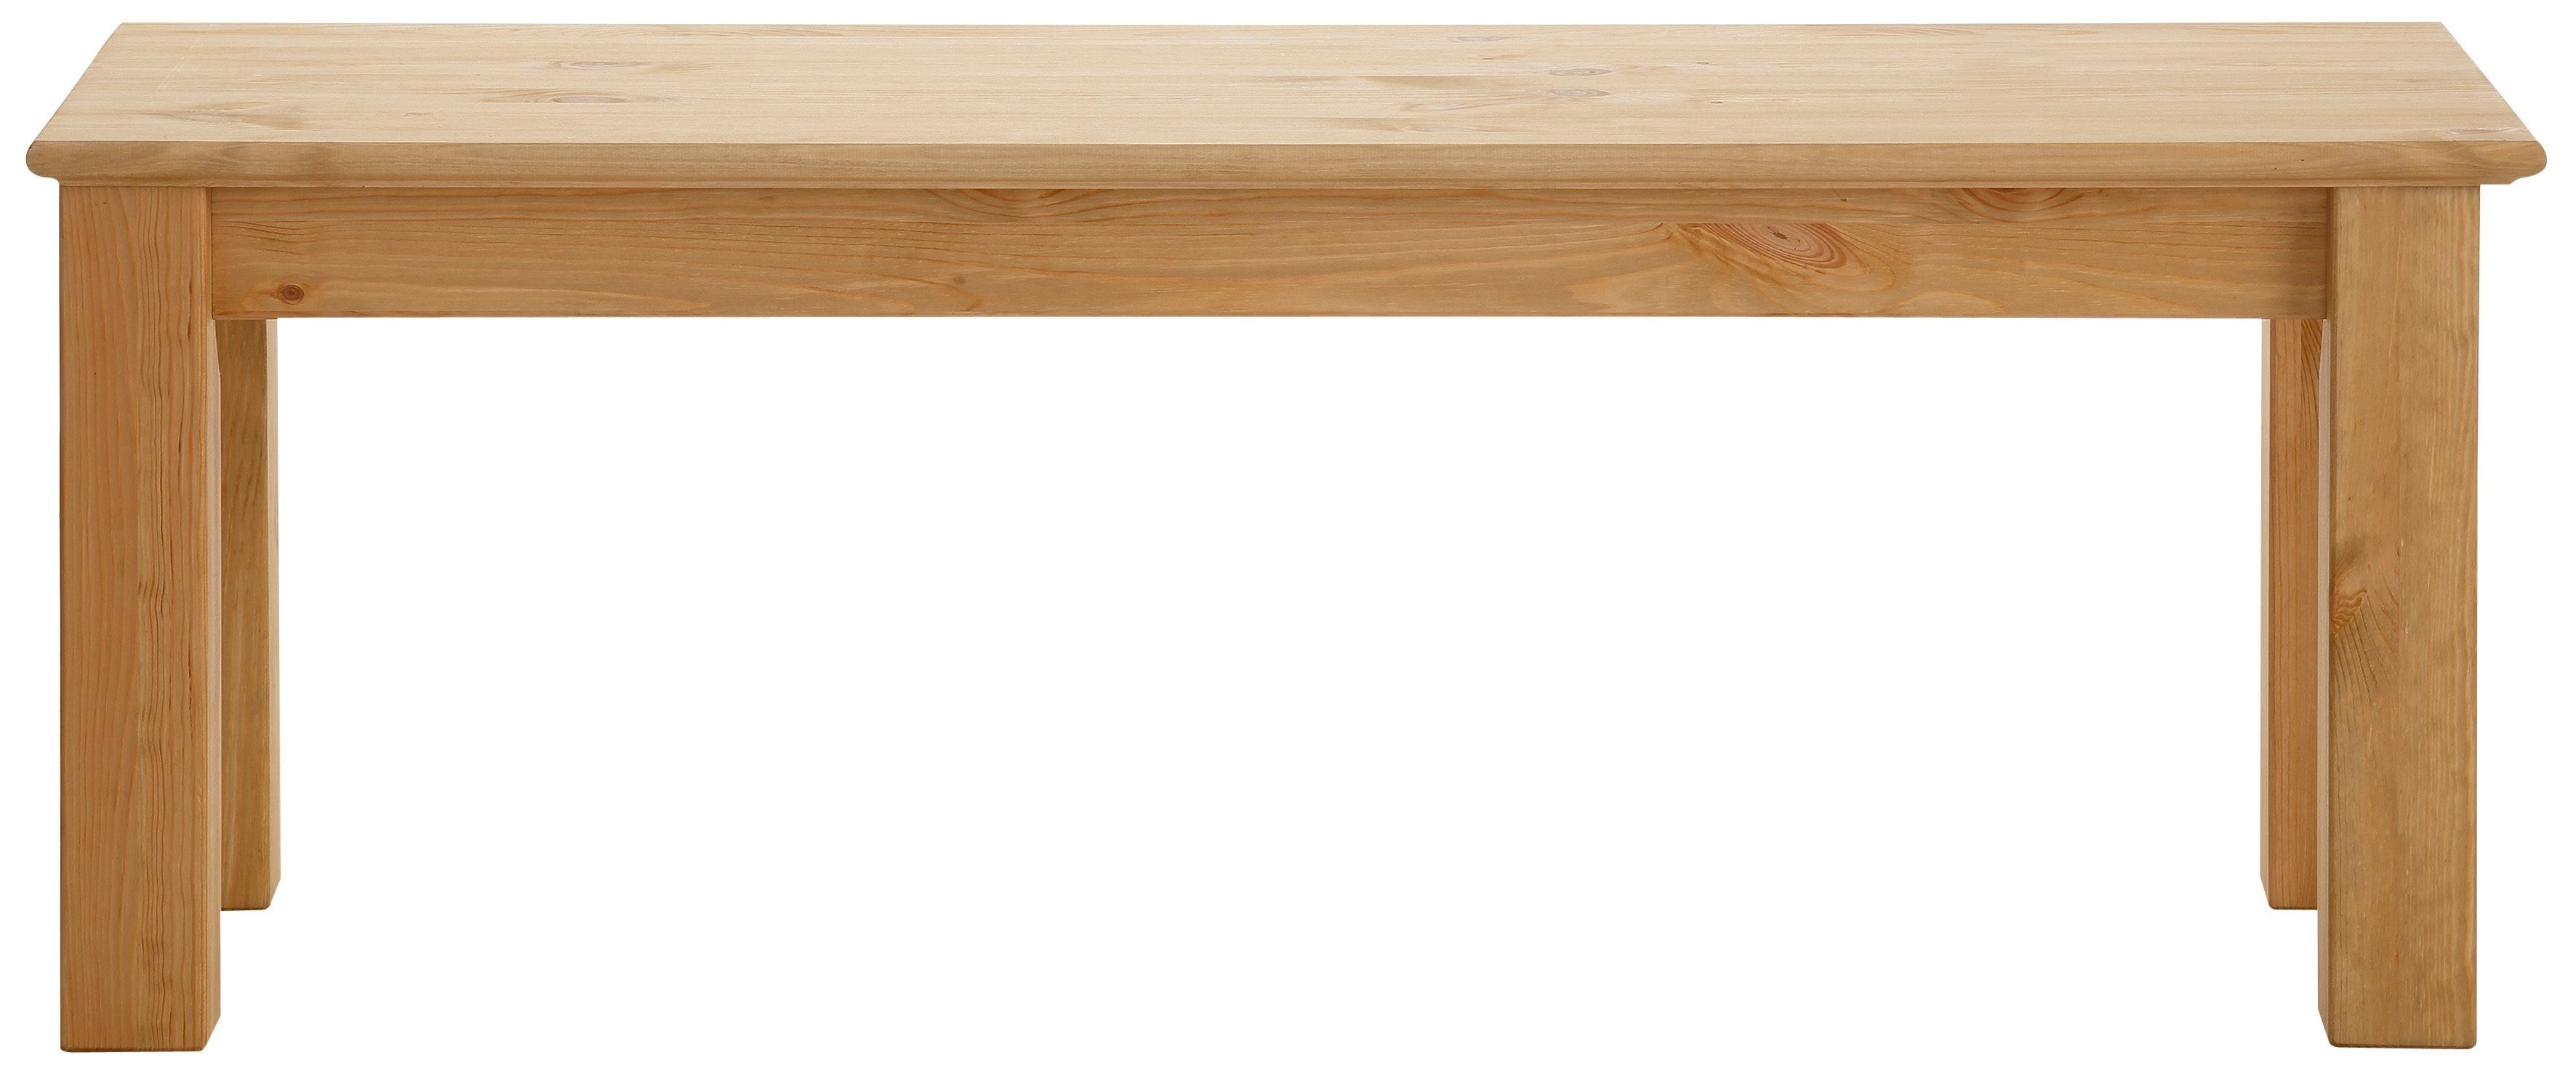 Home affaire Sitzbank, Breite 120 cm, aus massiver, FSC-zertifizierter Kiefer